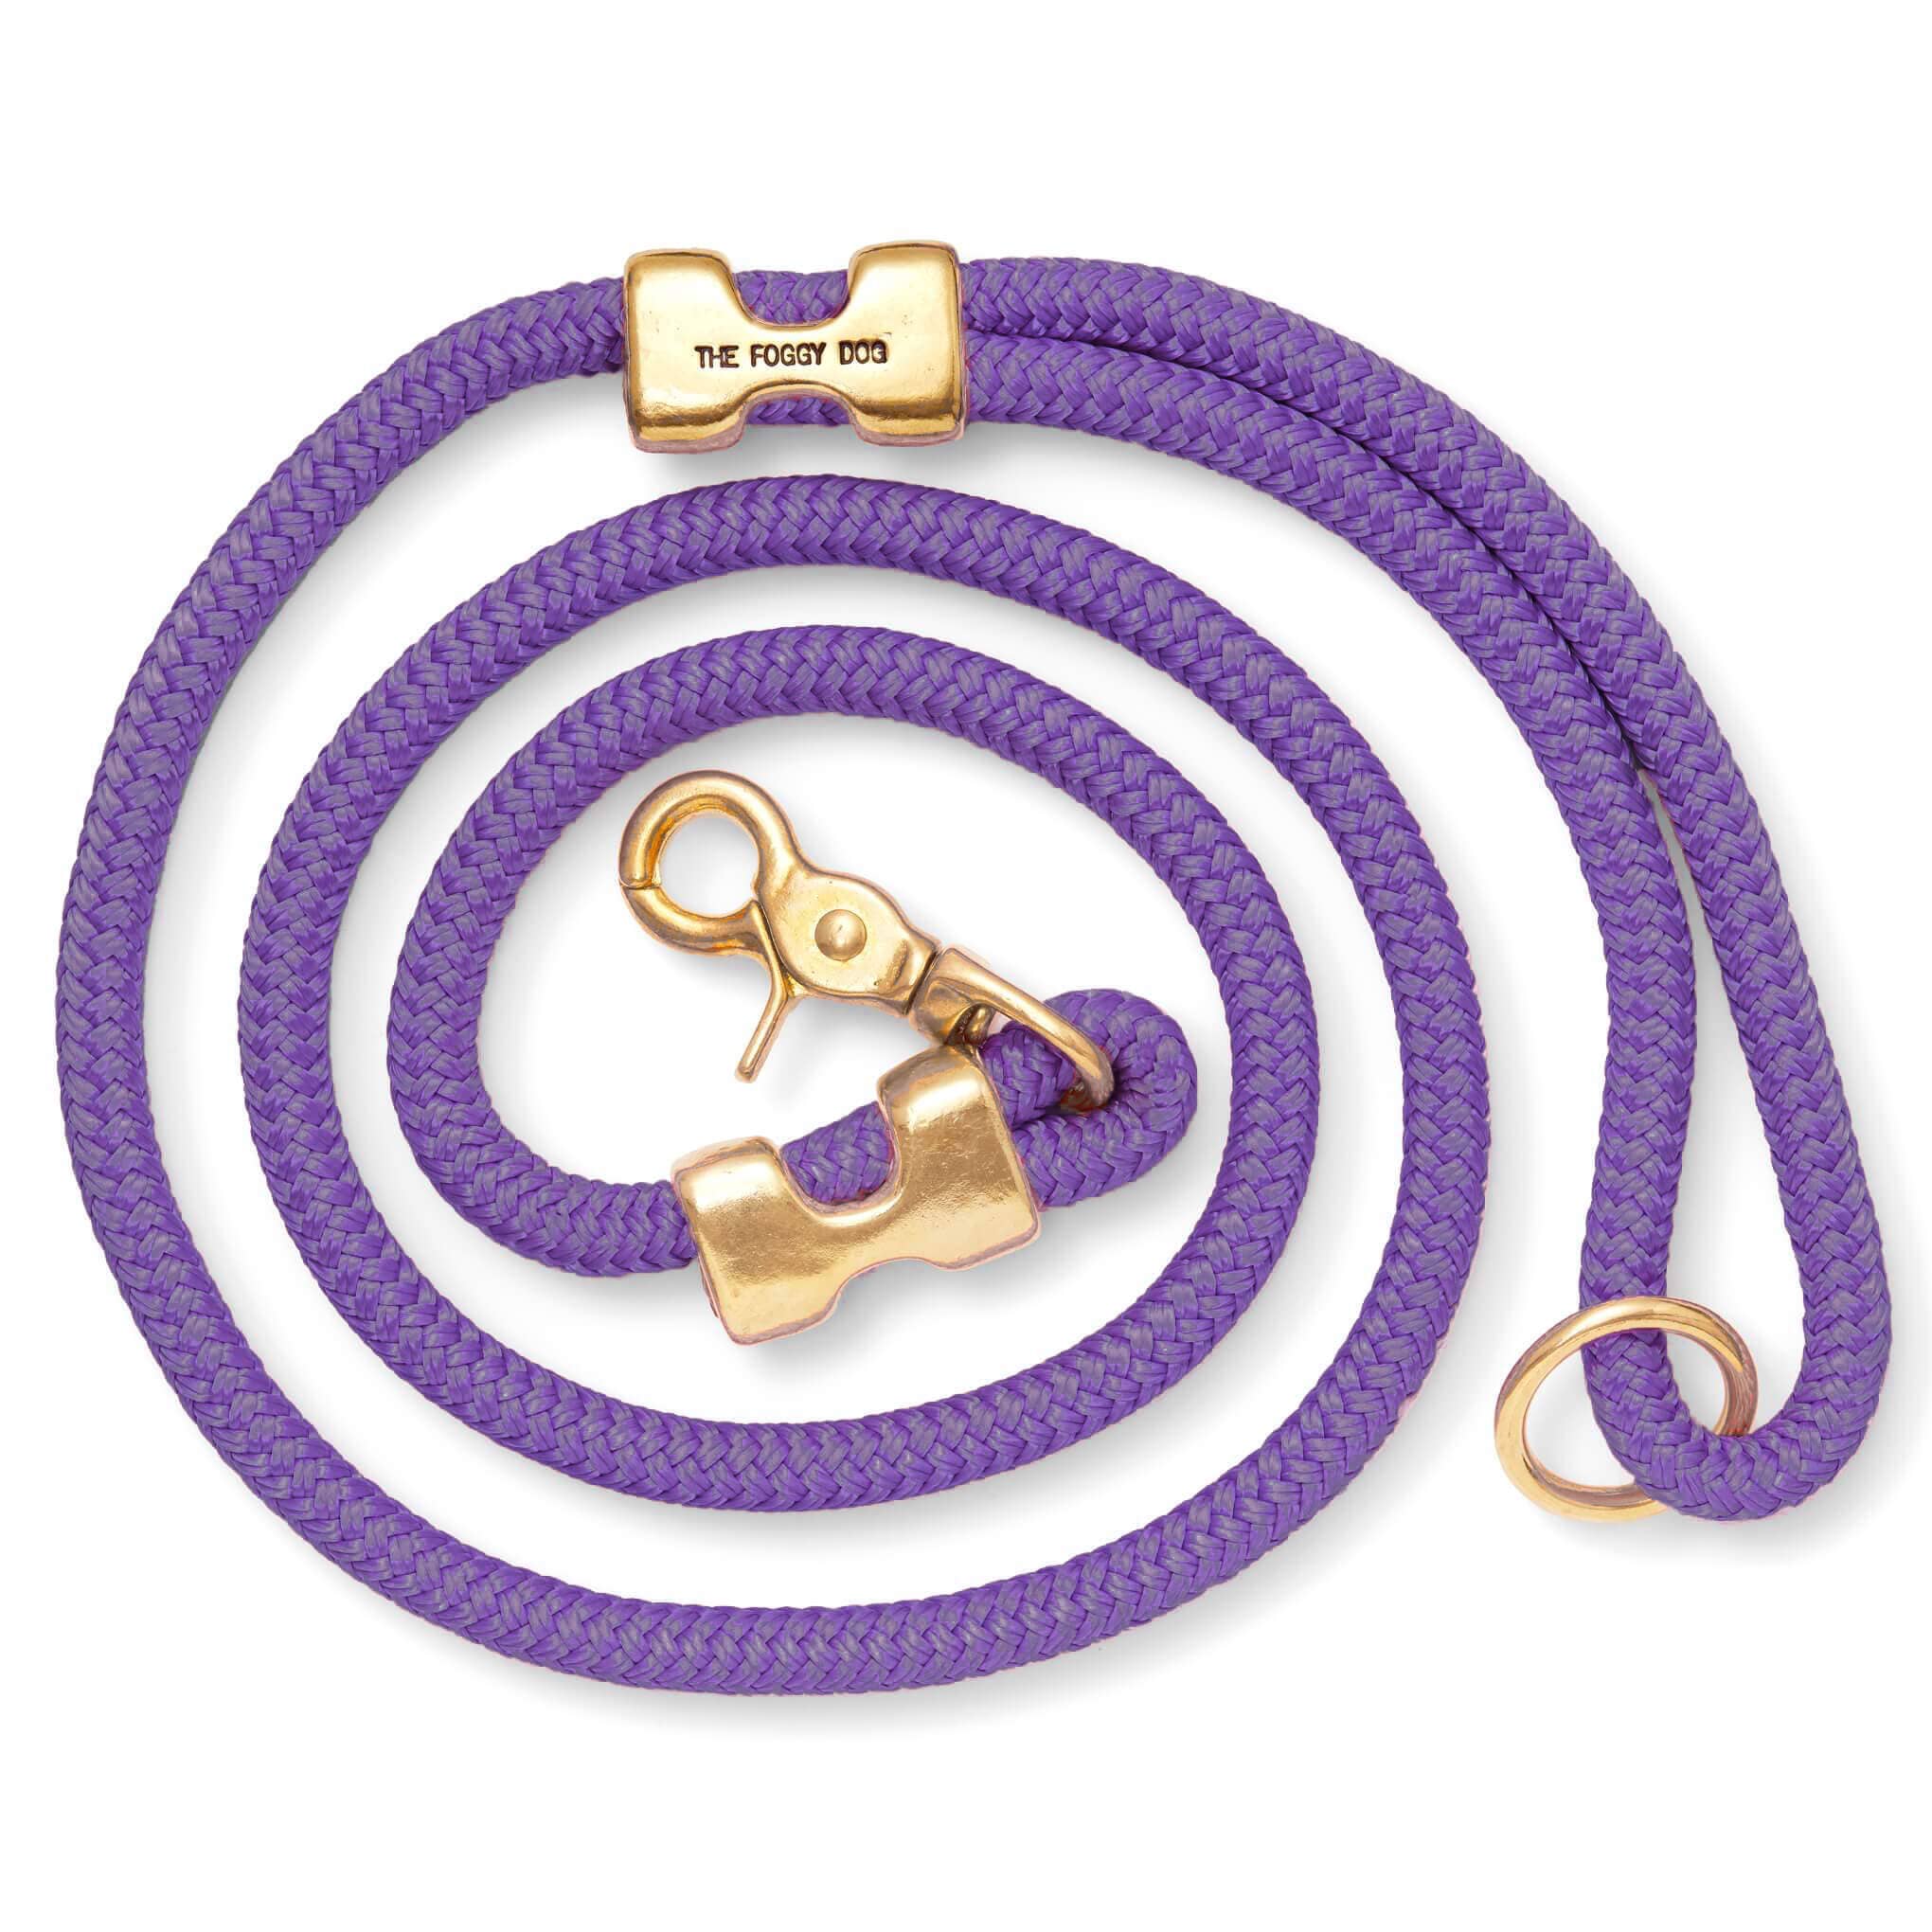 The Foggy Dog Violet Marine Rope Dog Leash